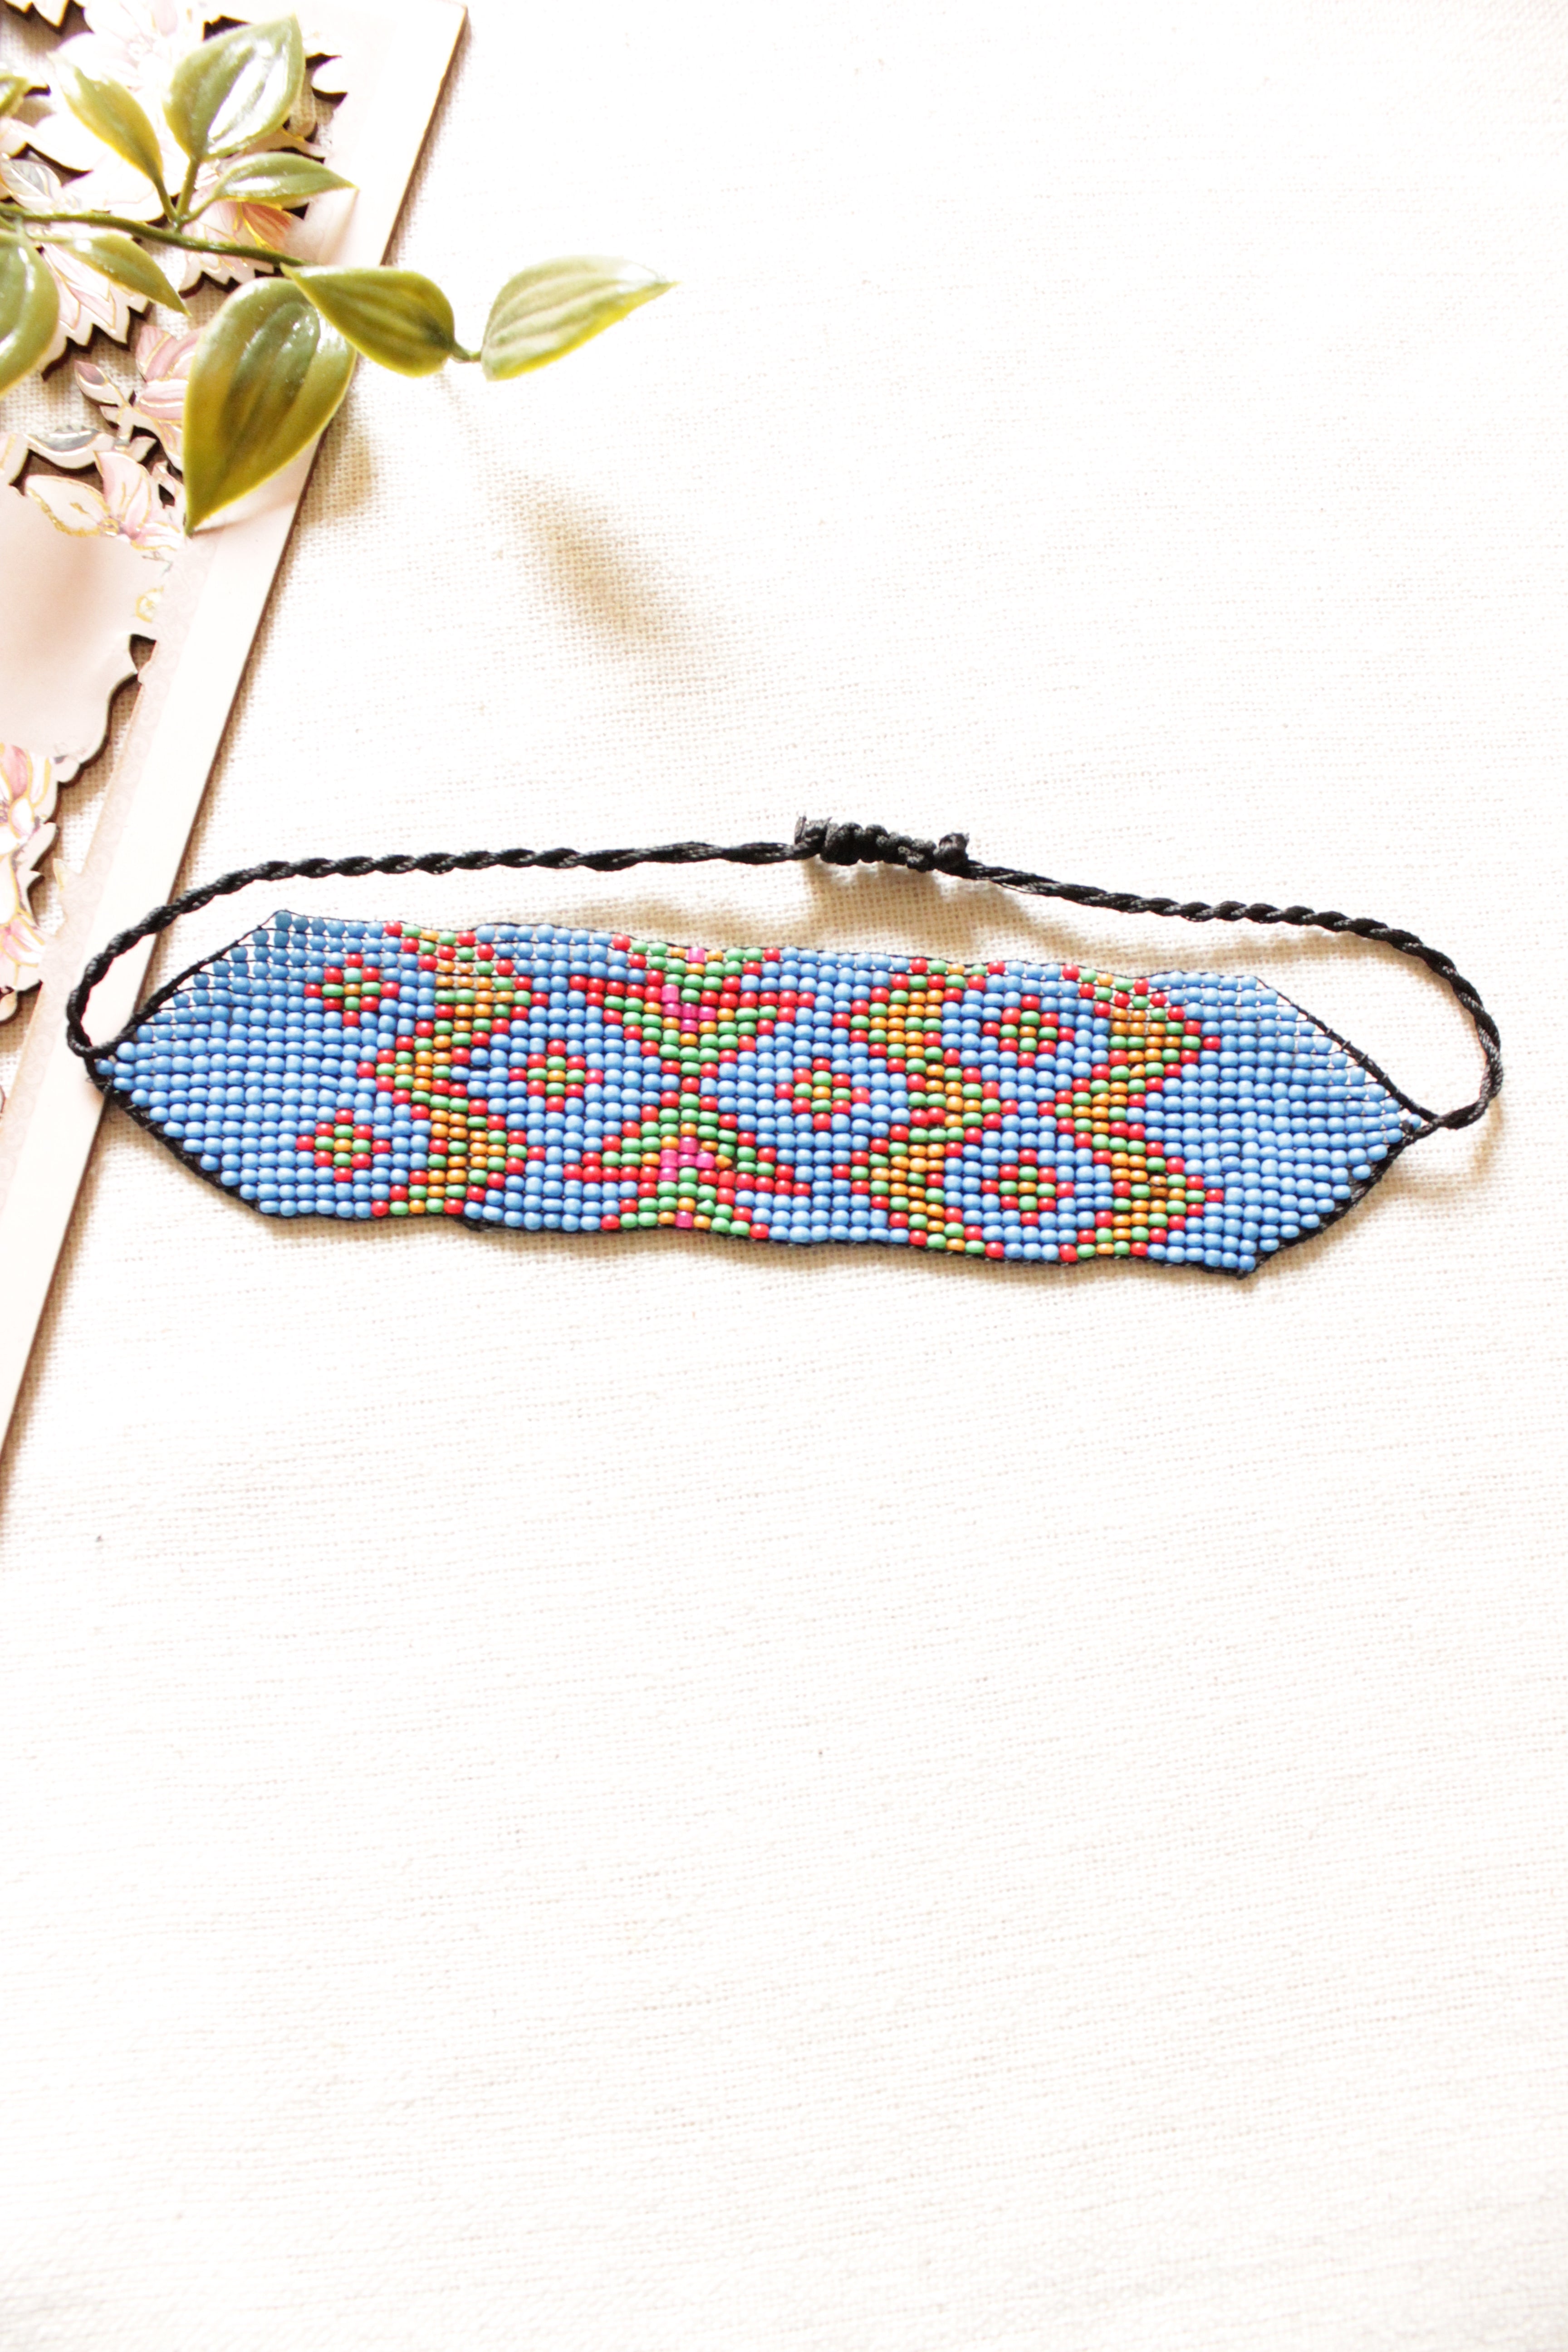 Blue Seed Beads Handmade Beaded Bracelet with Adjustable Length